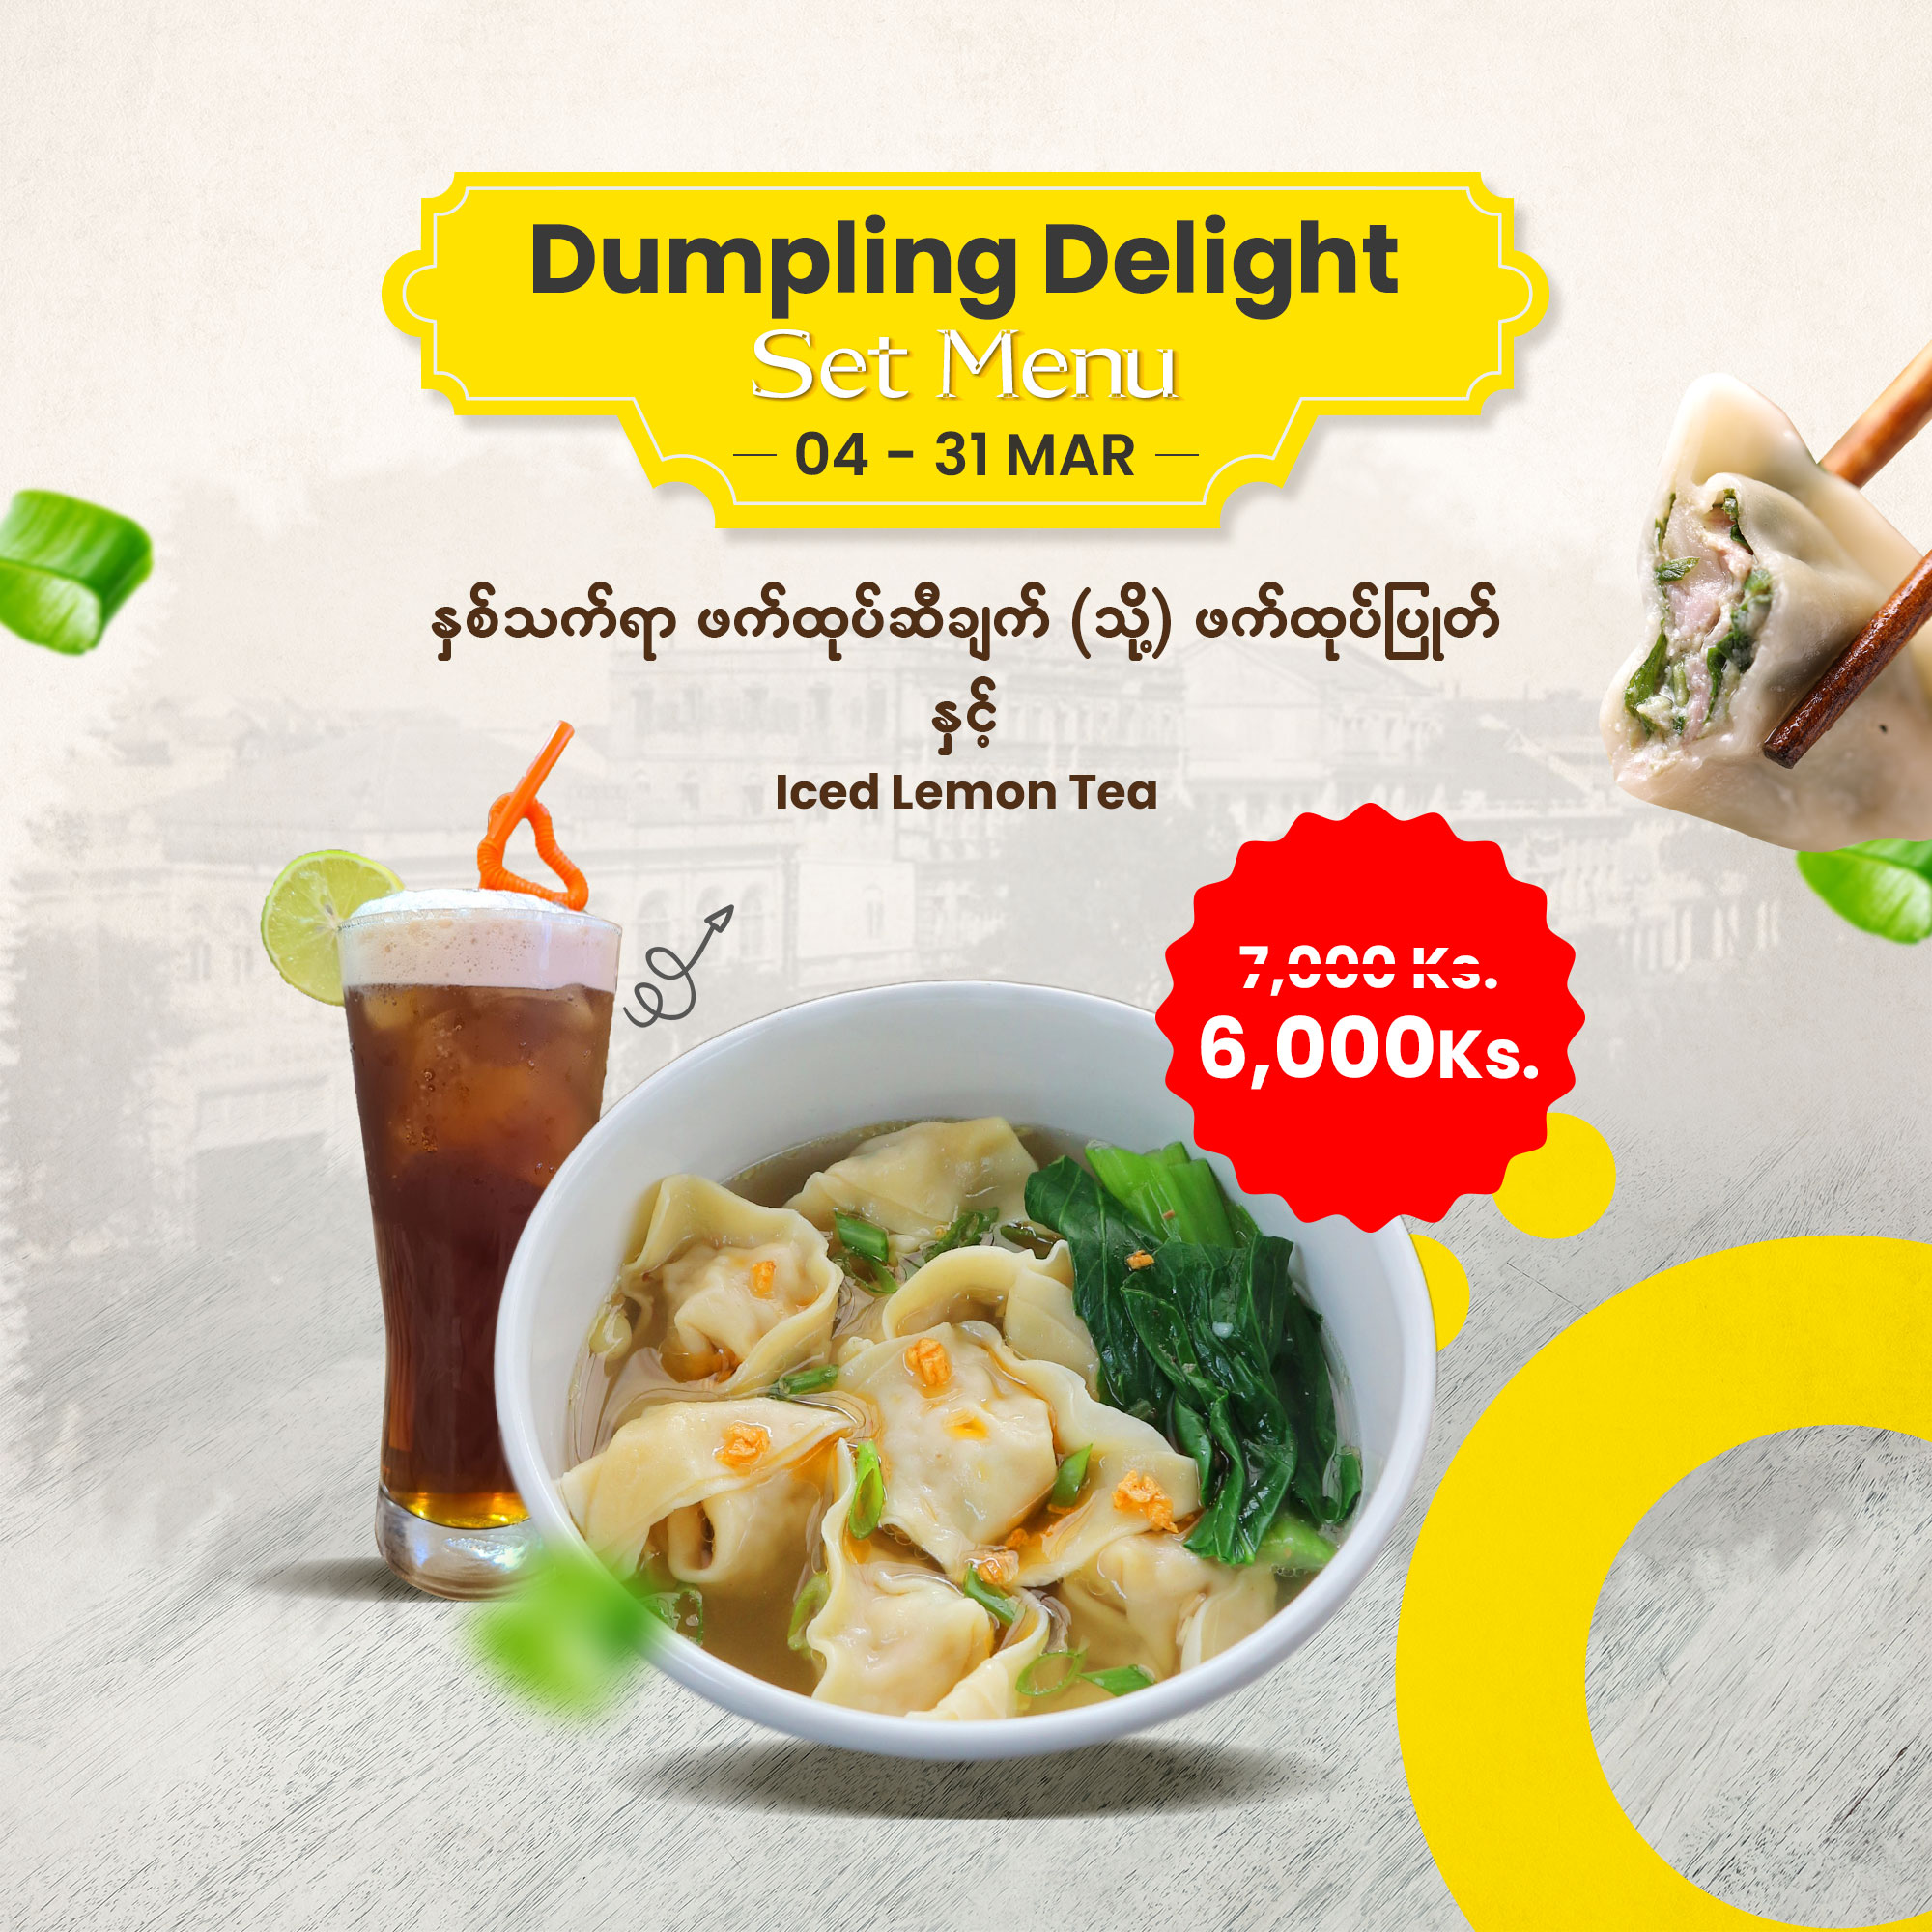 Dumpling Delight